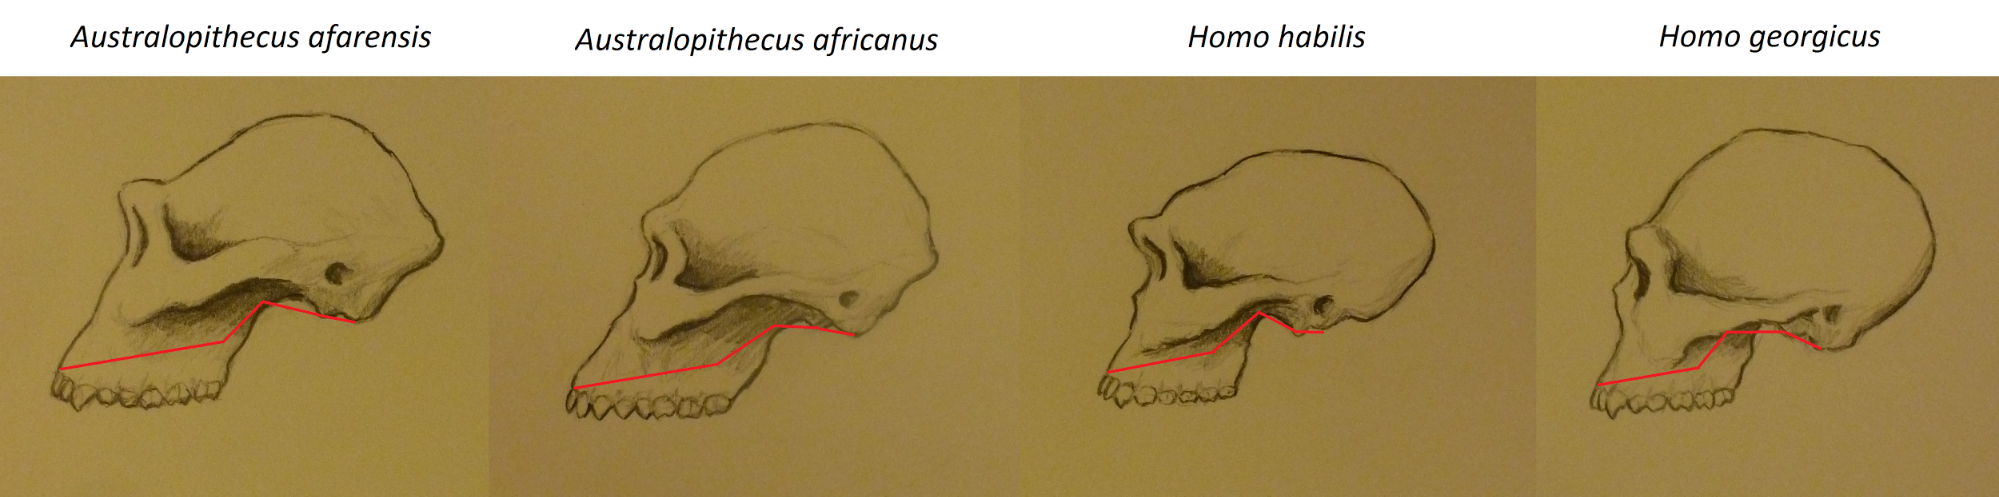 Figure 7.30 Basicranial flexion in four hominin species. Illustration by Keenan Taylor.